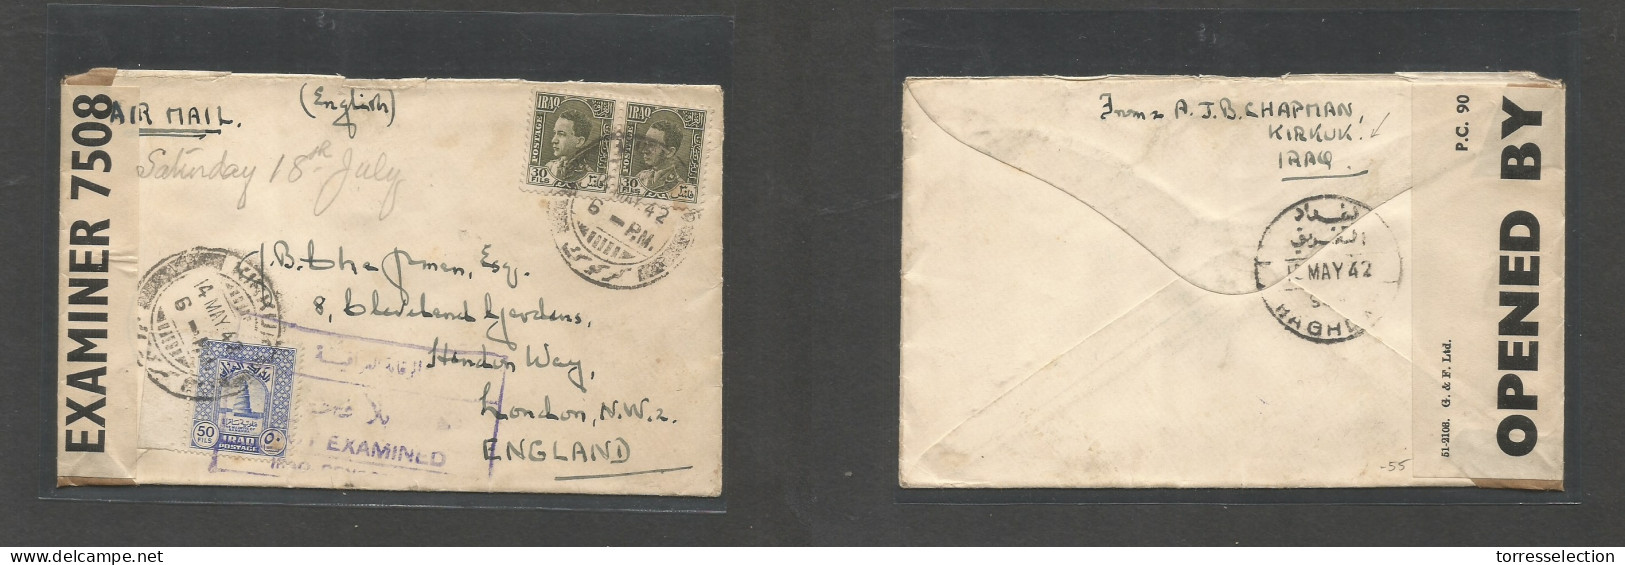 IRAQ. 1942 (14 May) Kirkuk - England, London WWII Multifkd Env At 110 Fils, Rate. Airmail Censored At Origin And Destina - Irak